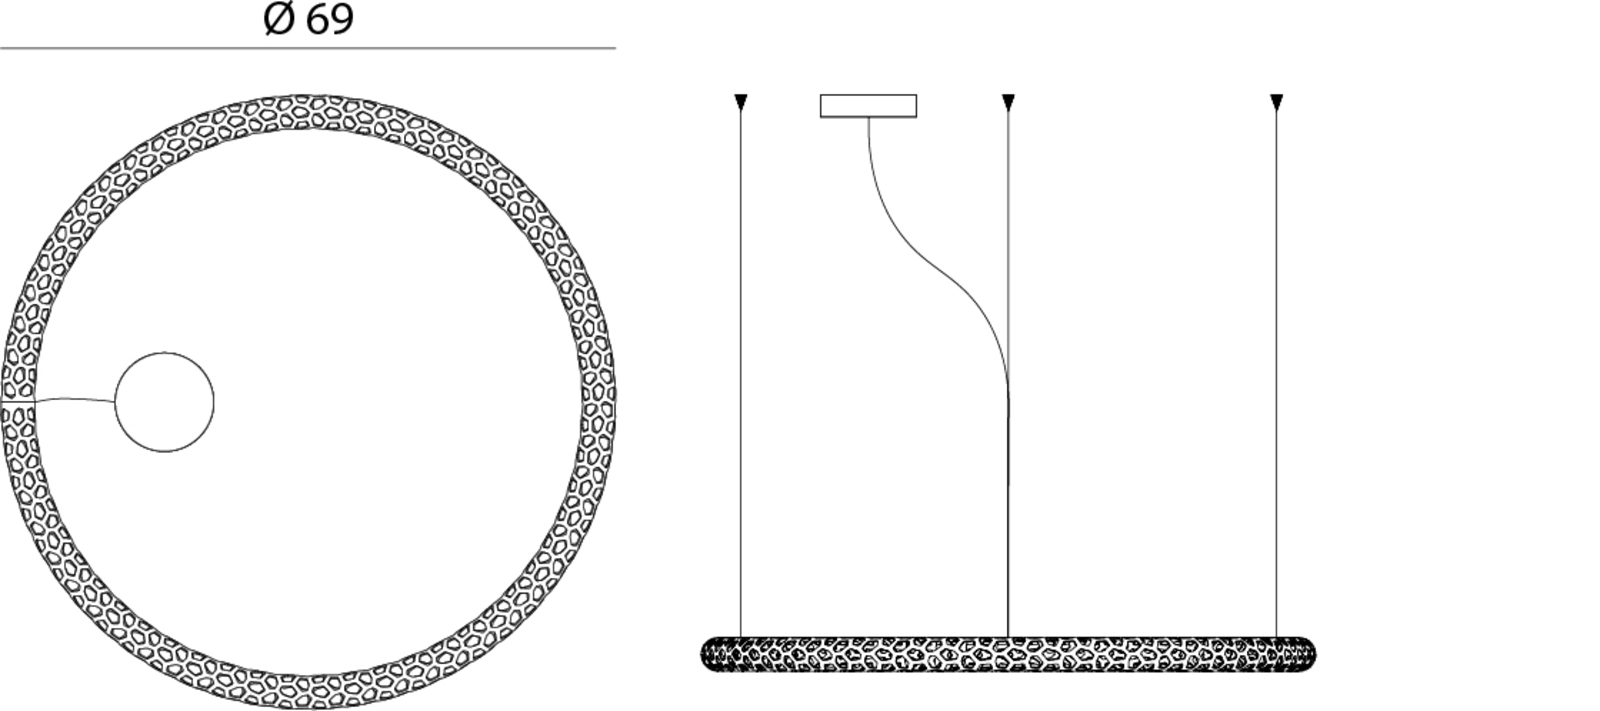 Rotaliana Squiggle H1 LED-riippuvalo Ø 69cm